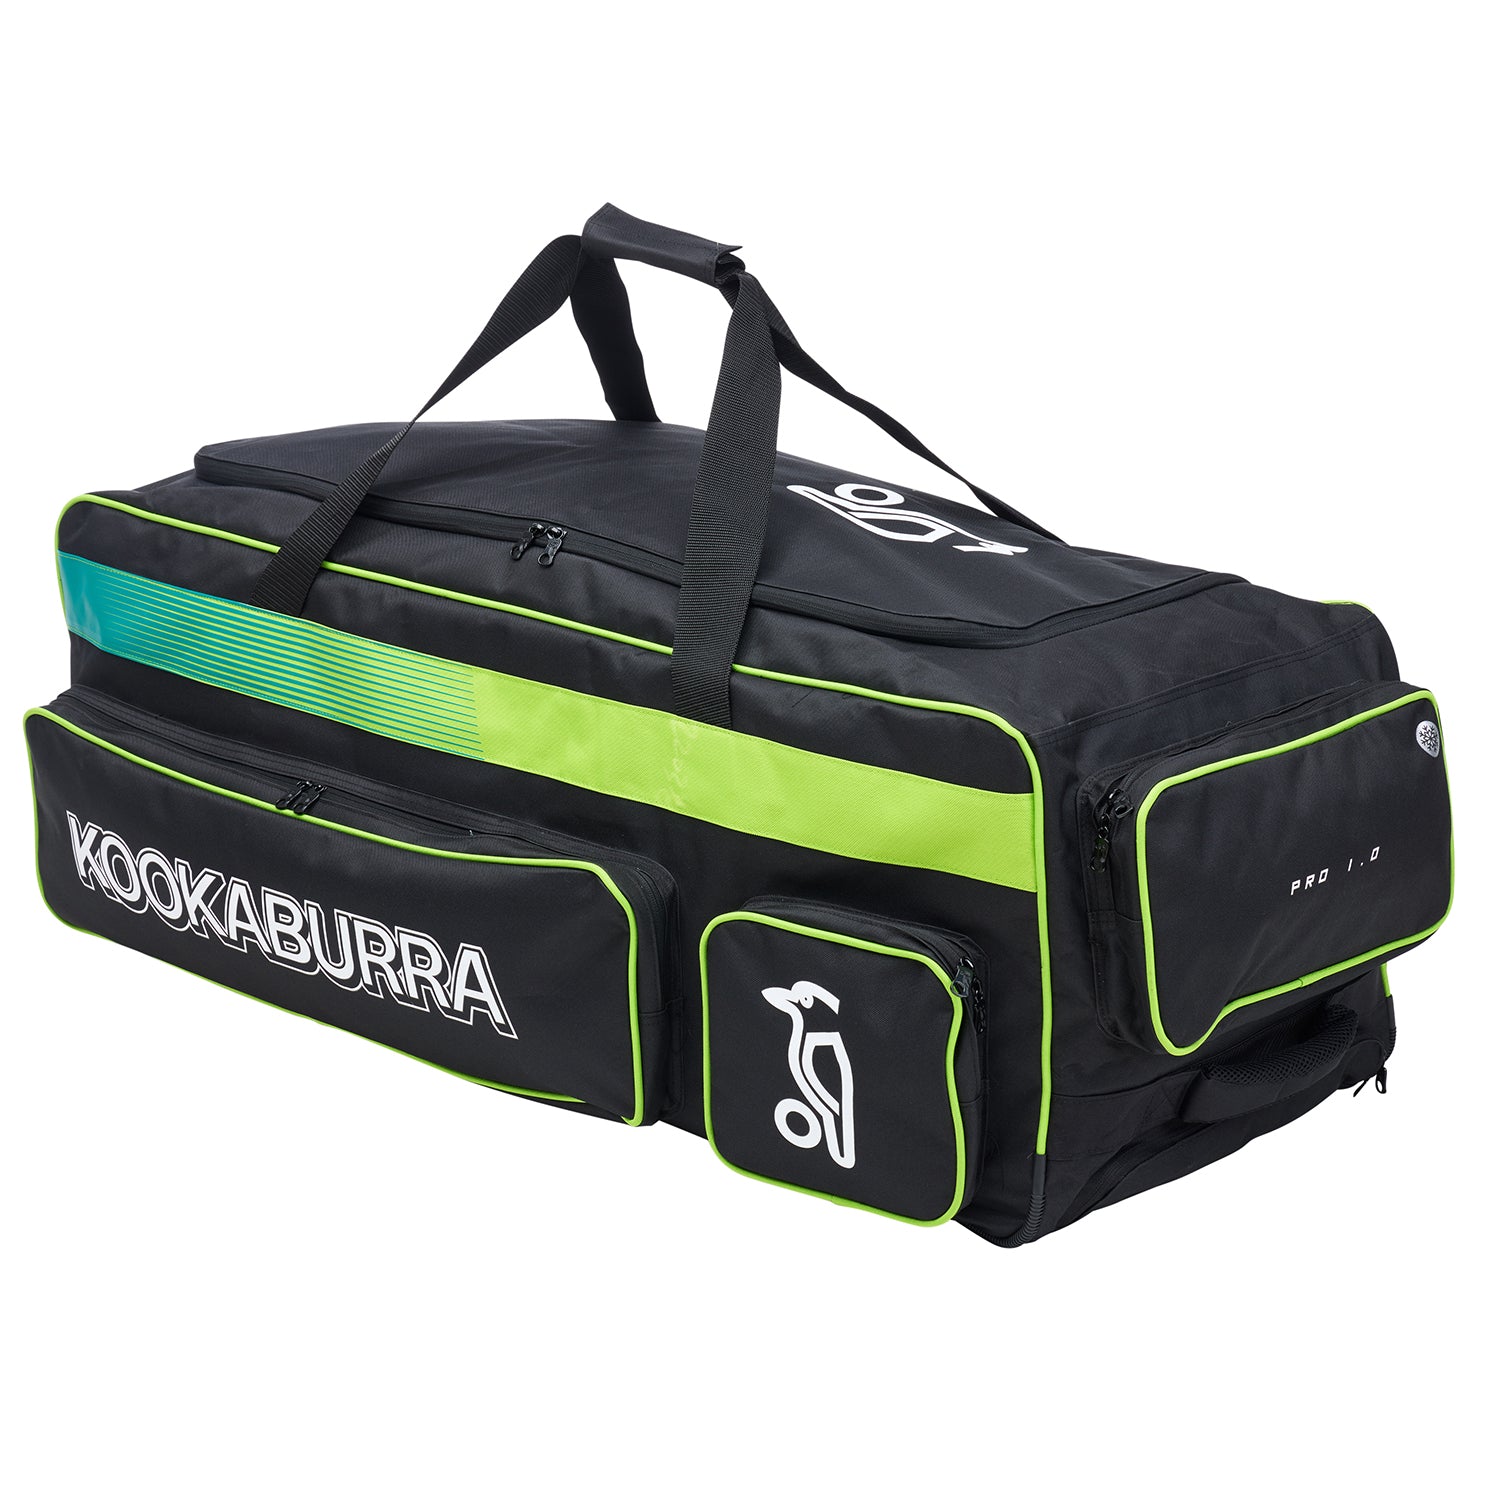 Kookaburra Pro 1.0 Cricket Wheelie Bag